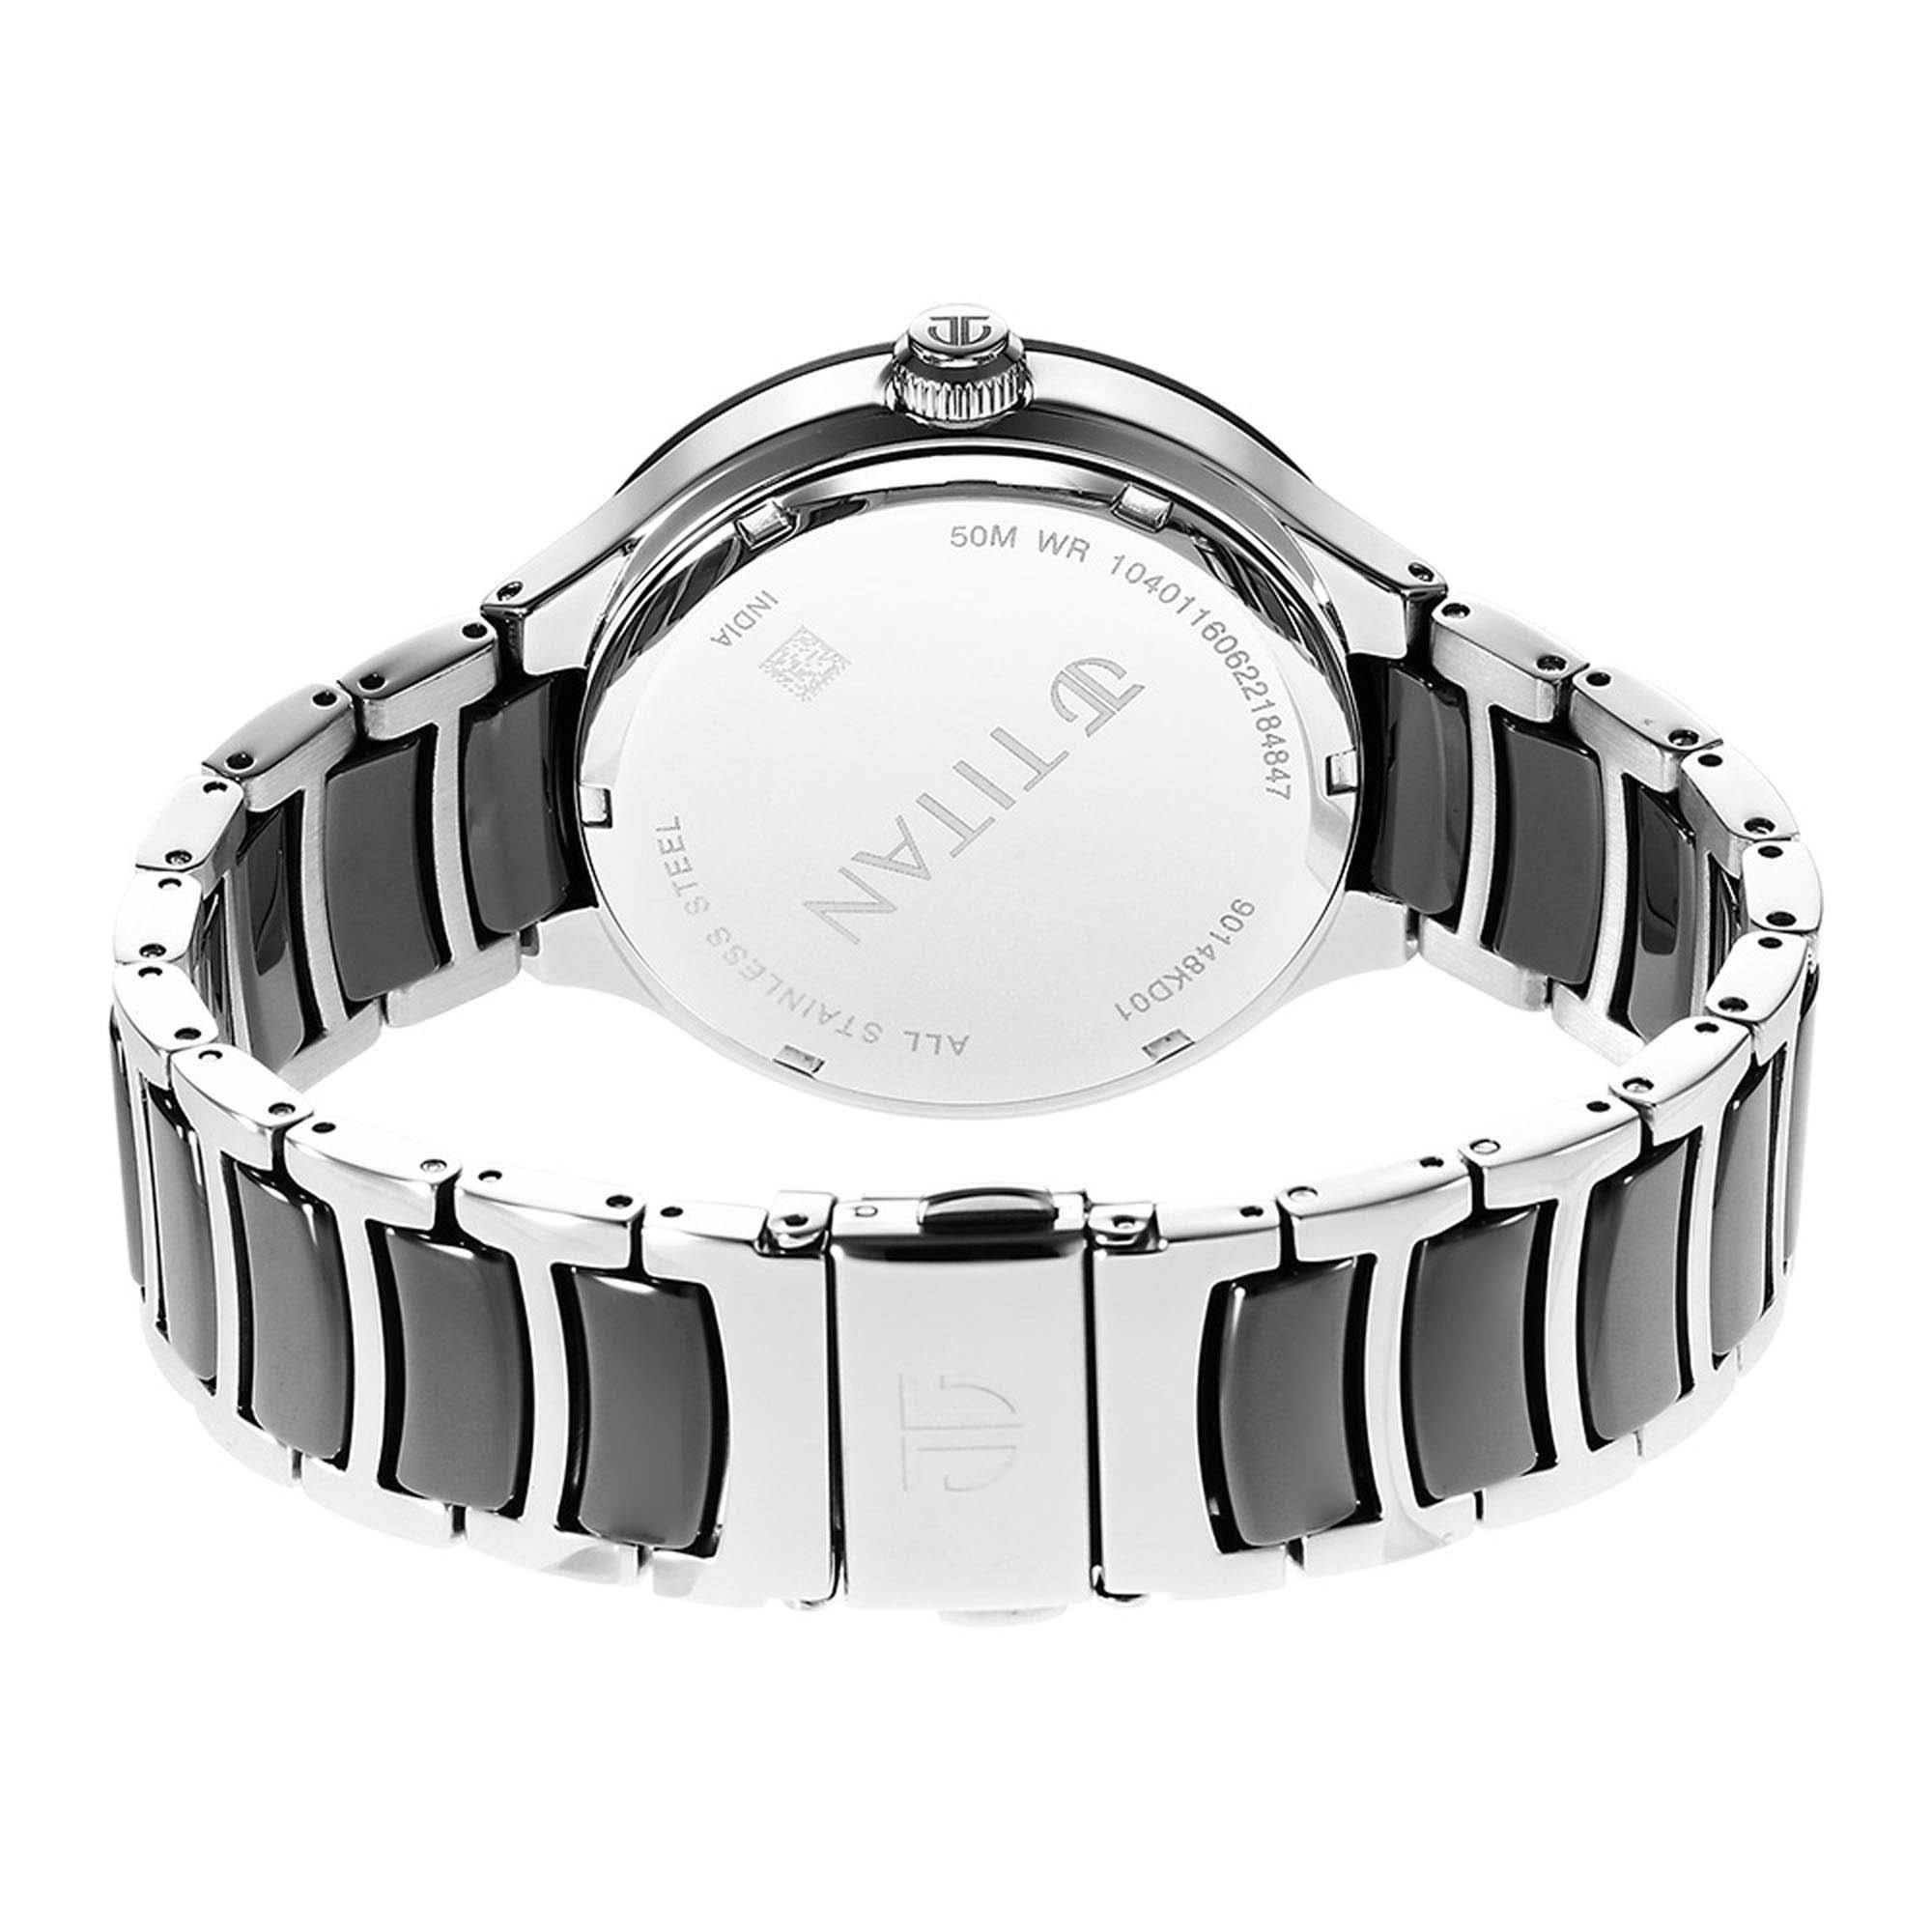 Titan Ceramic Fusion Black Dial Multi Stainless Steel Strap watch for Men